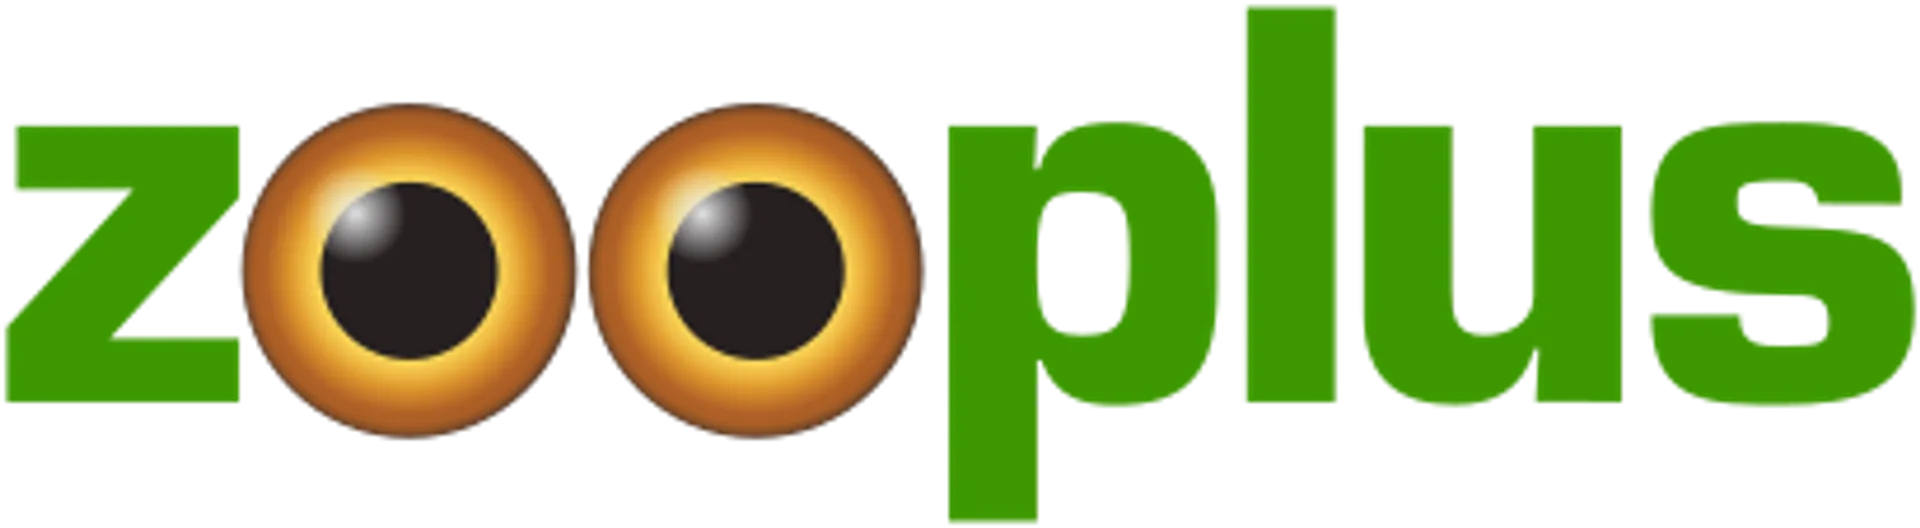 ZOOPLUS logo die aktuell Flugblatt